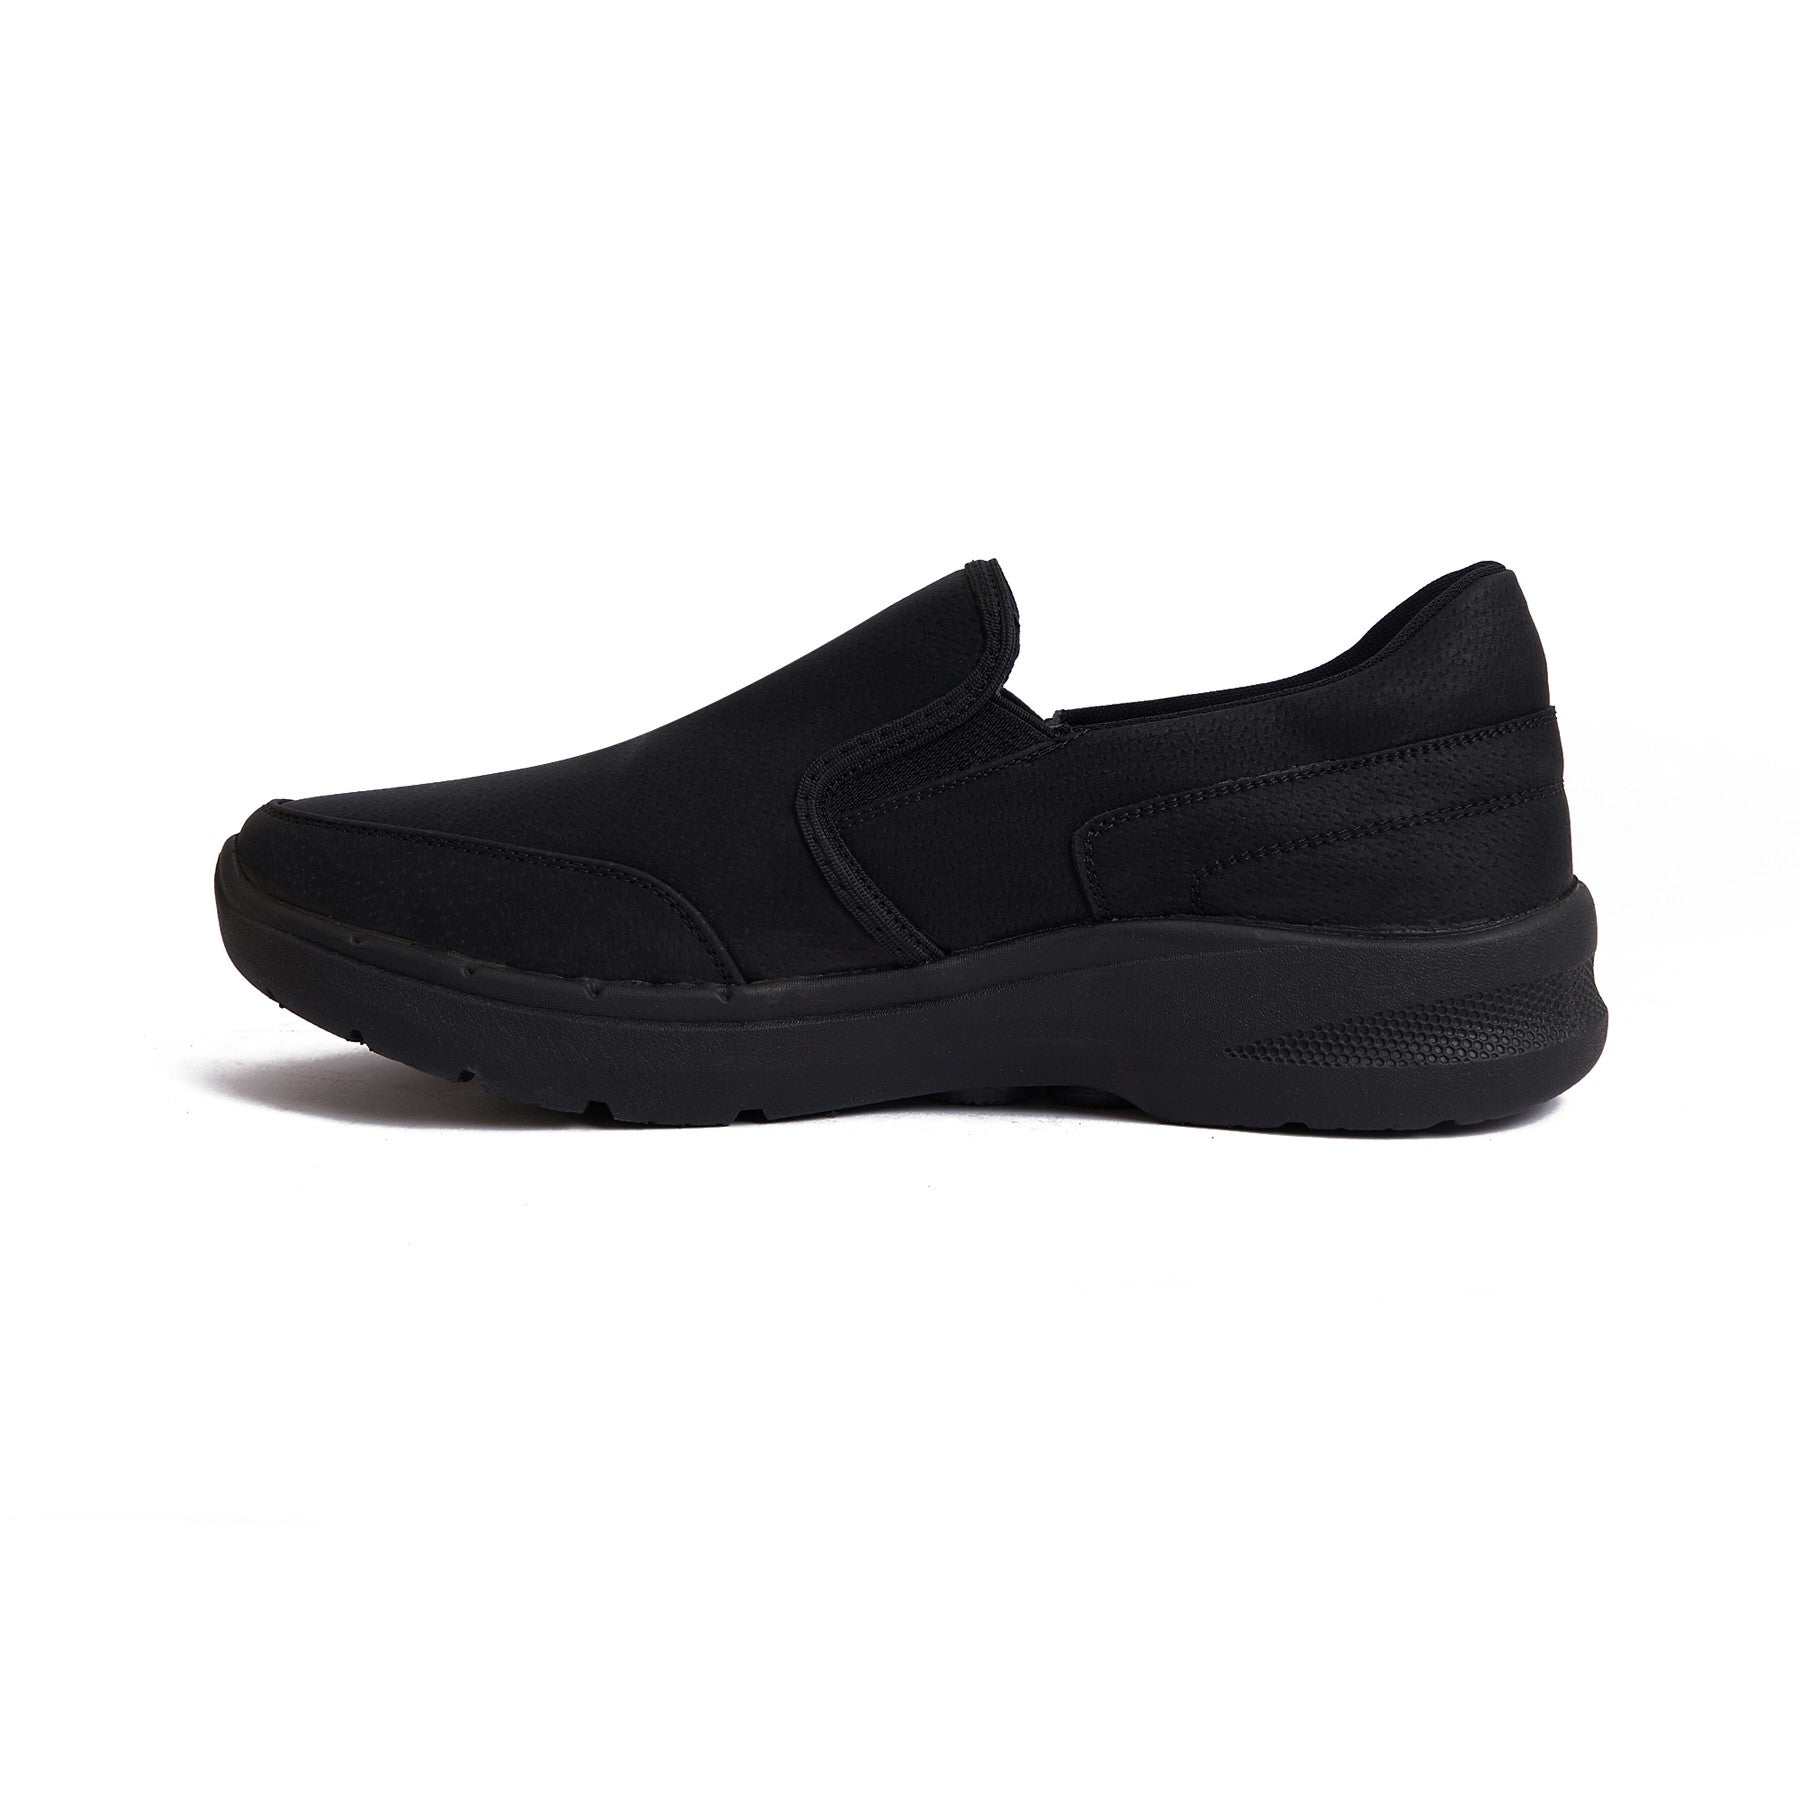 Men's Skechers Sleek and Stylish in Black-Model V302 | Egyptian-Made Shoes